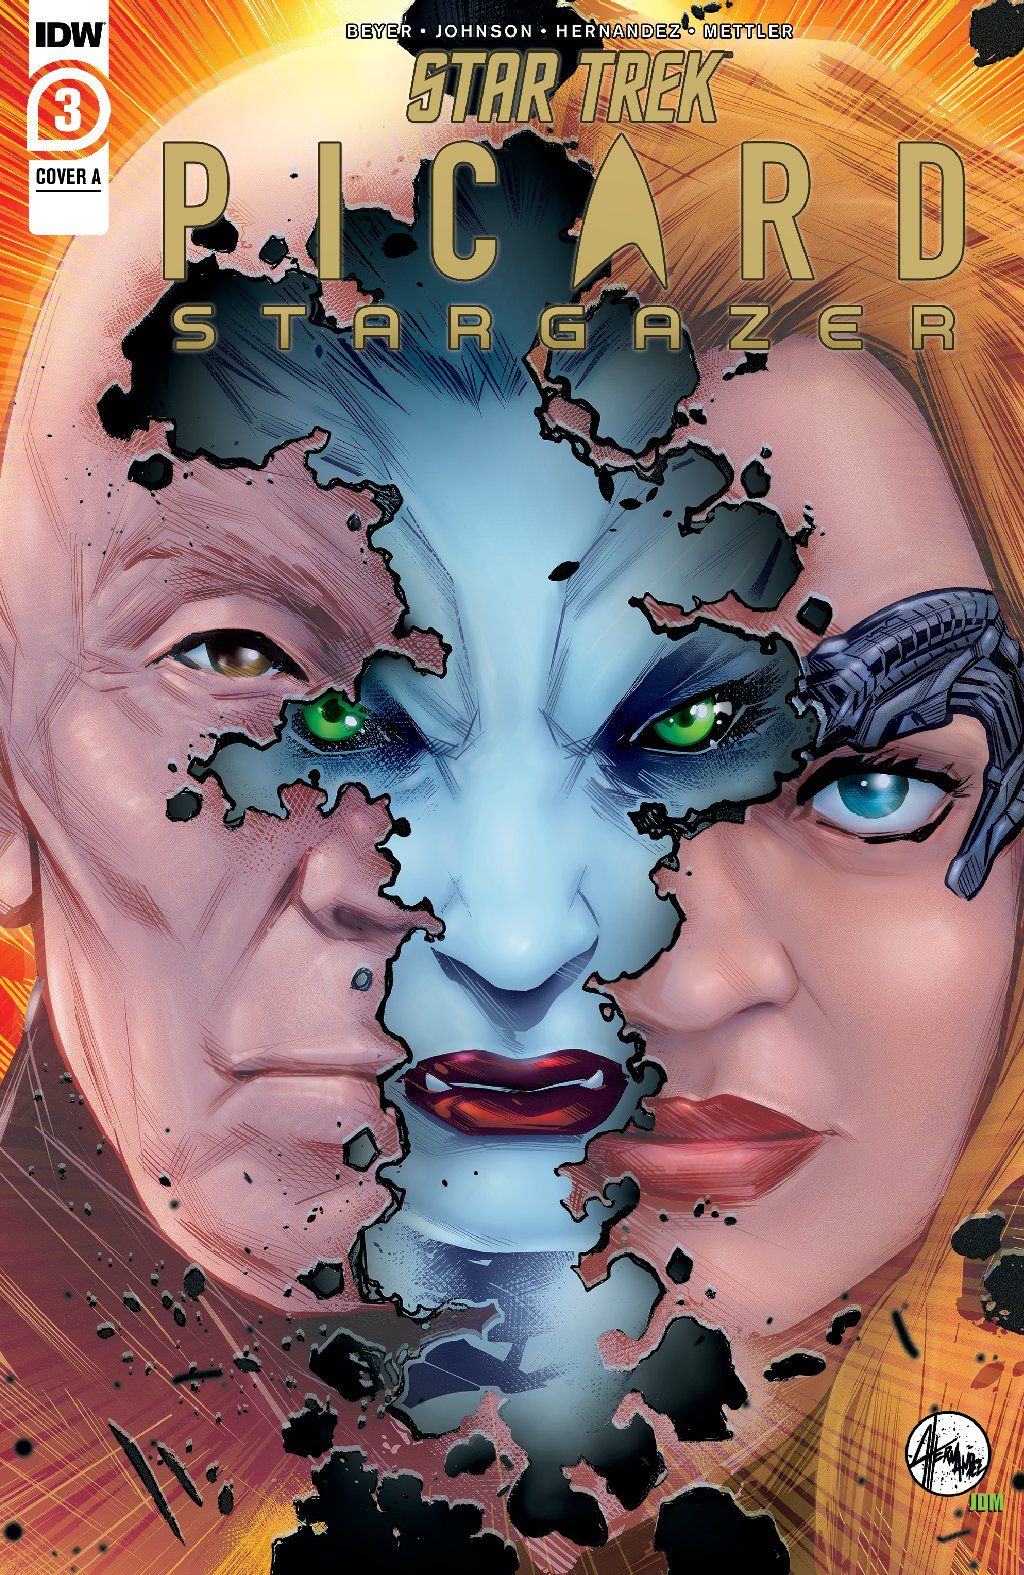 Star Trek: Picard: Stargazer #3 – IDW Publishing